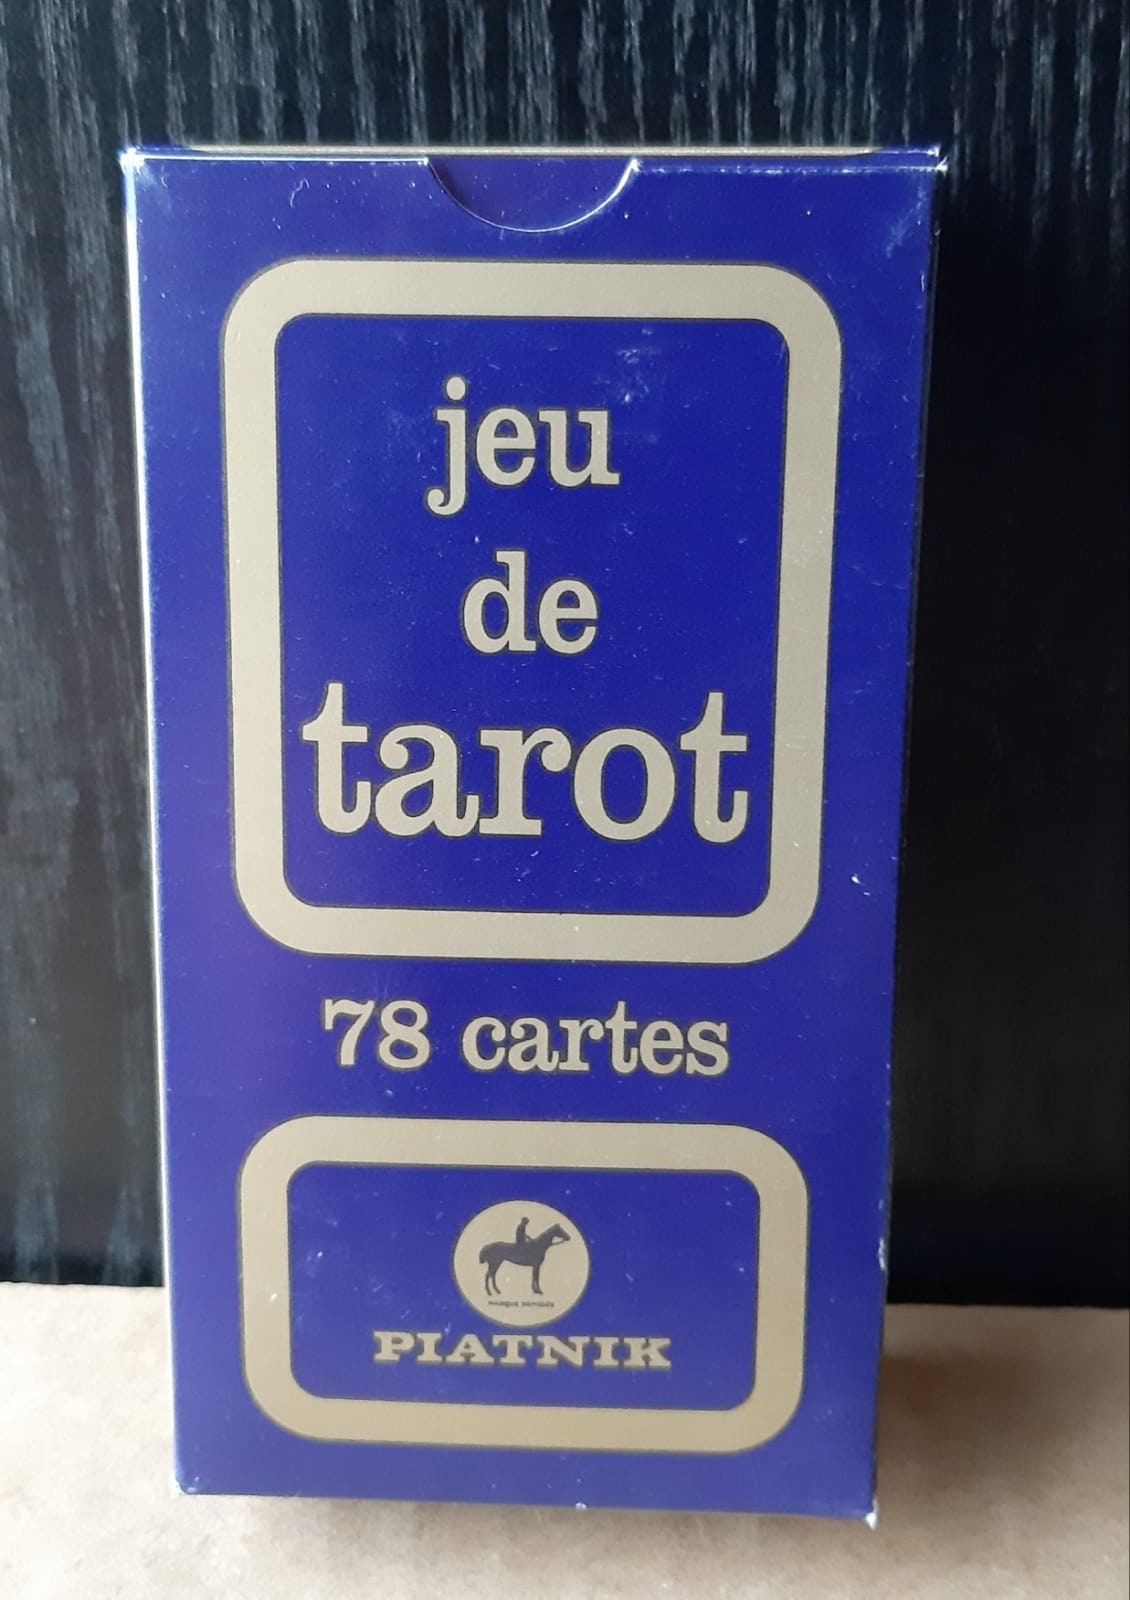 Jeu de Tarot 78 cartes avec règle du jeu VINTAGE tarot deck